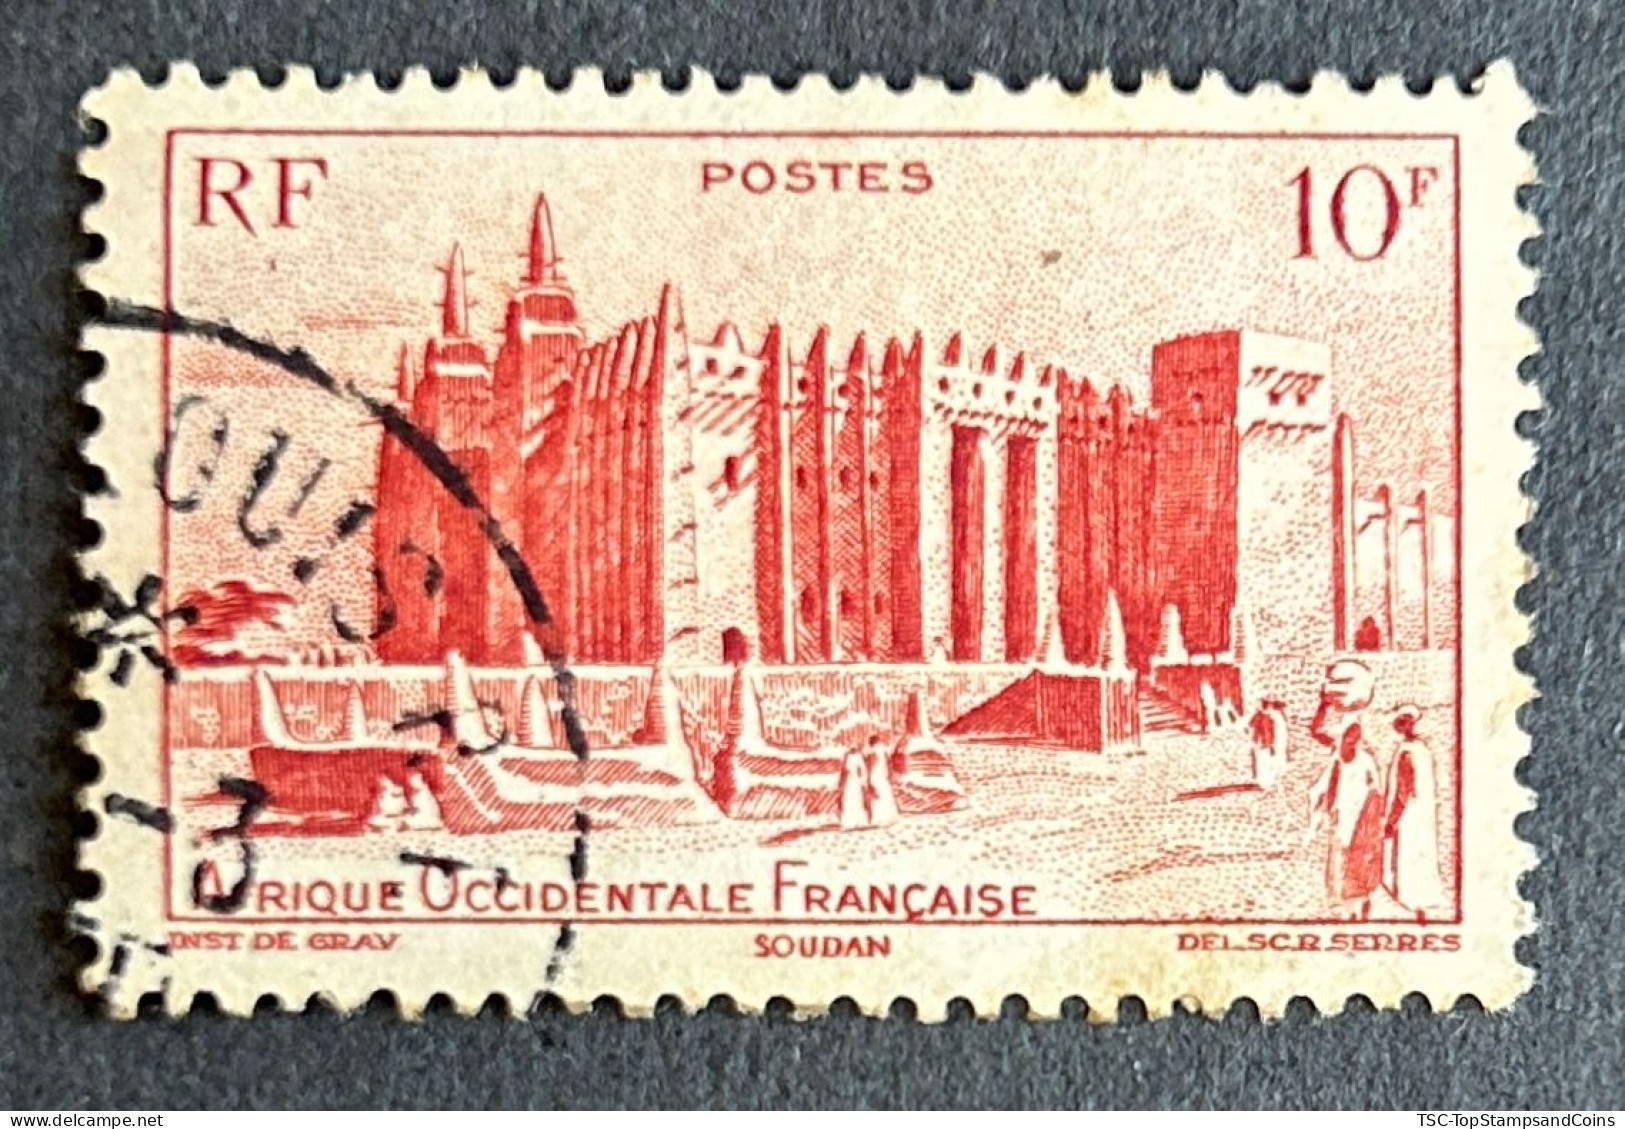 FRAWA0039U3 - Local Motives - Djenné Mosque - French Sudan - 10 F Used Stamp - AOF - 1947 - Gebraucht